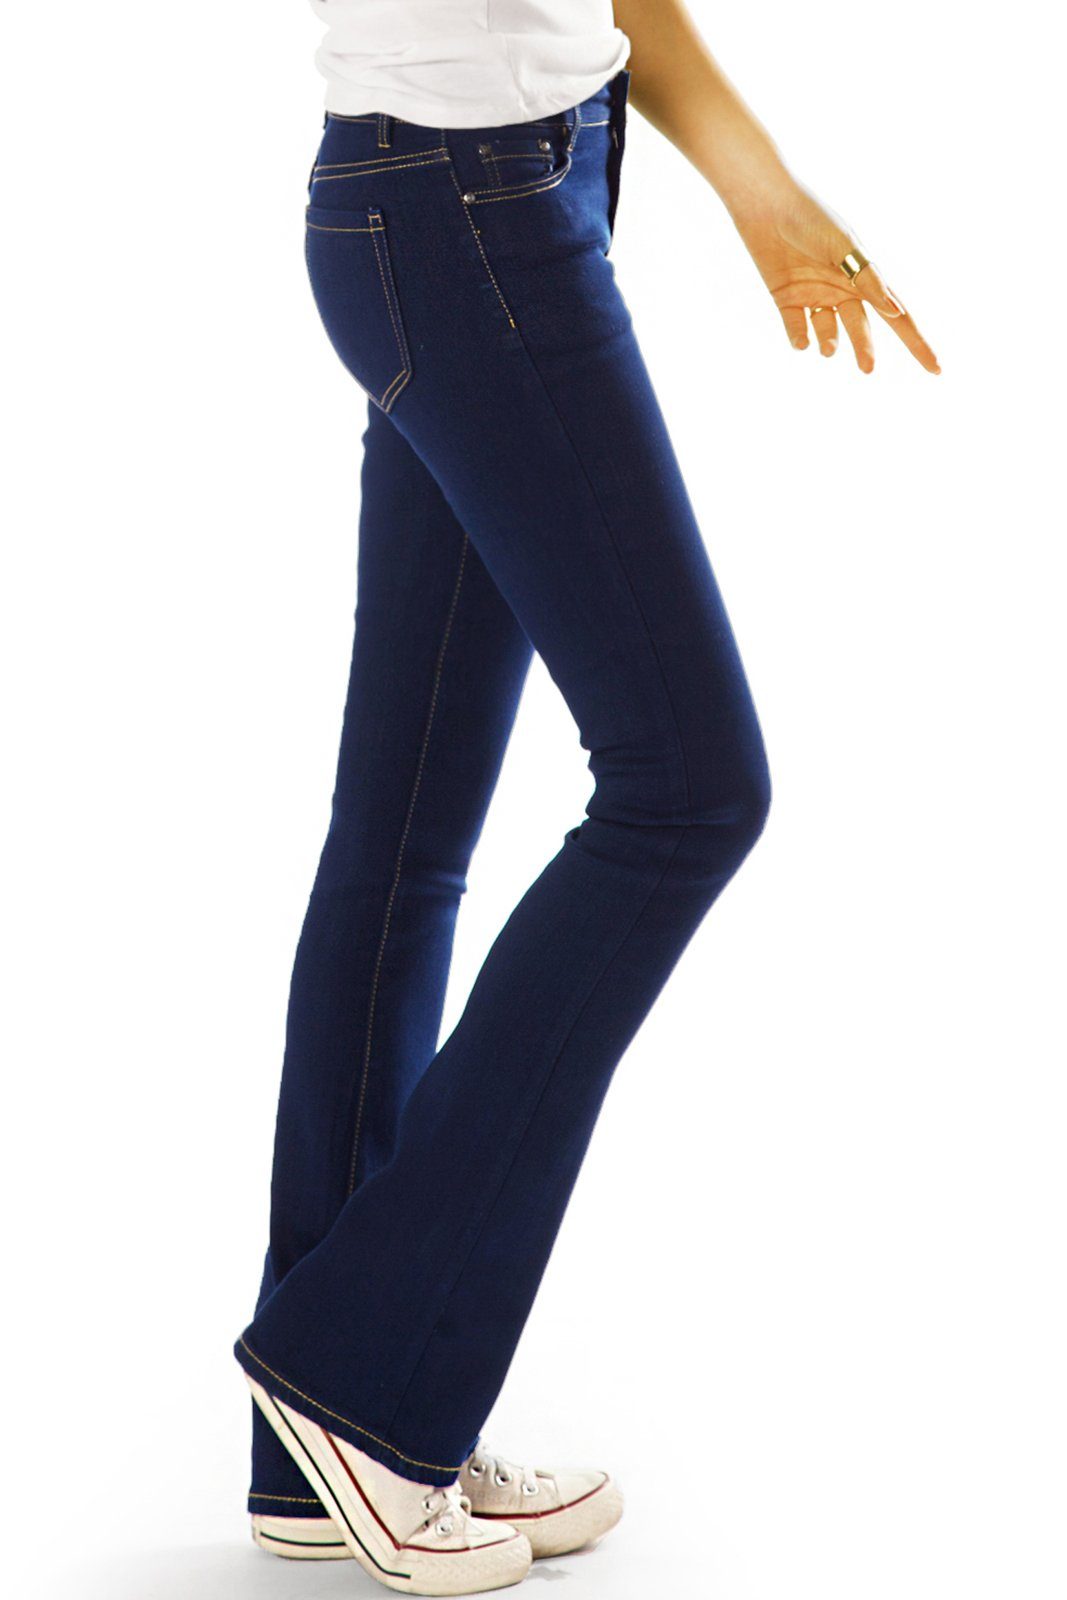 schwarz Damen -j18g Jeanshose Stretch-Anteil, 5-Pocket-Style Stretchjeans Hüftjeans Bootcut-Jeans Bootcut styled - mit be